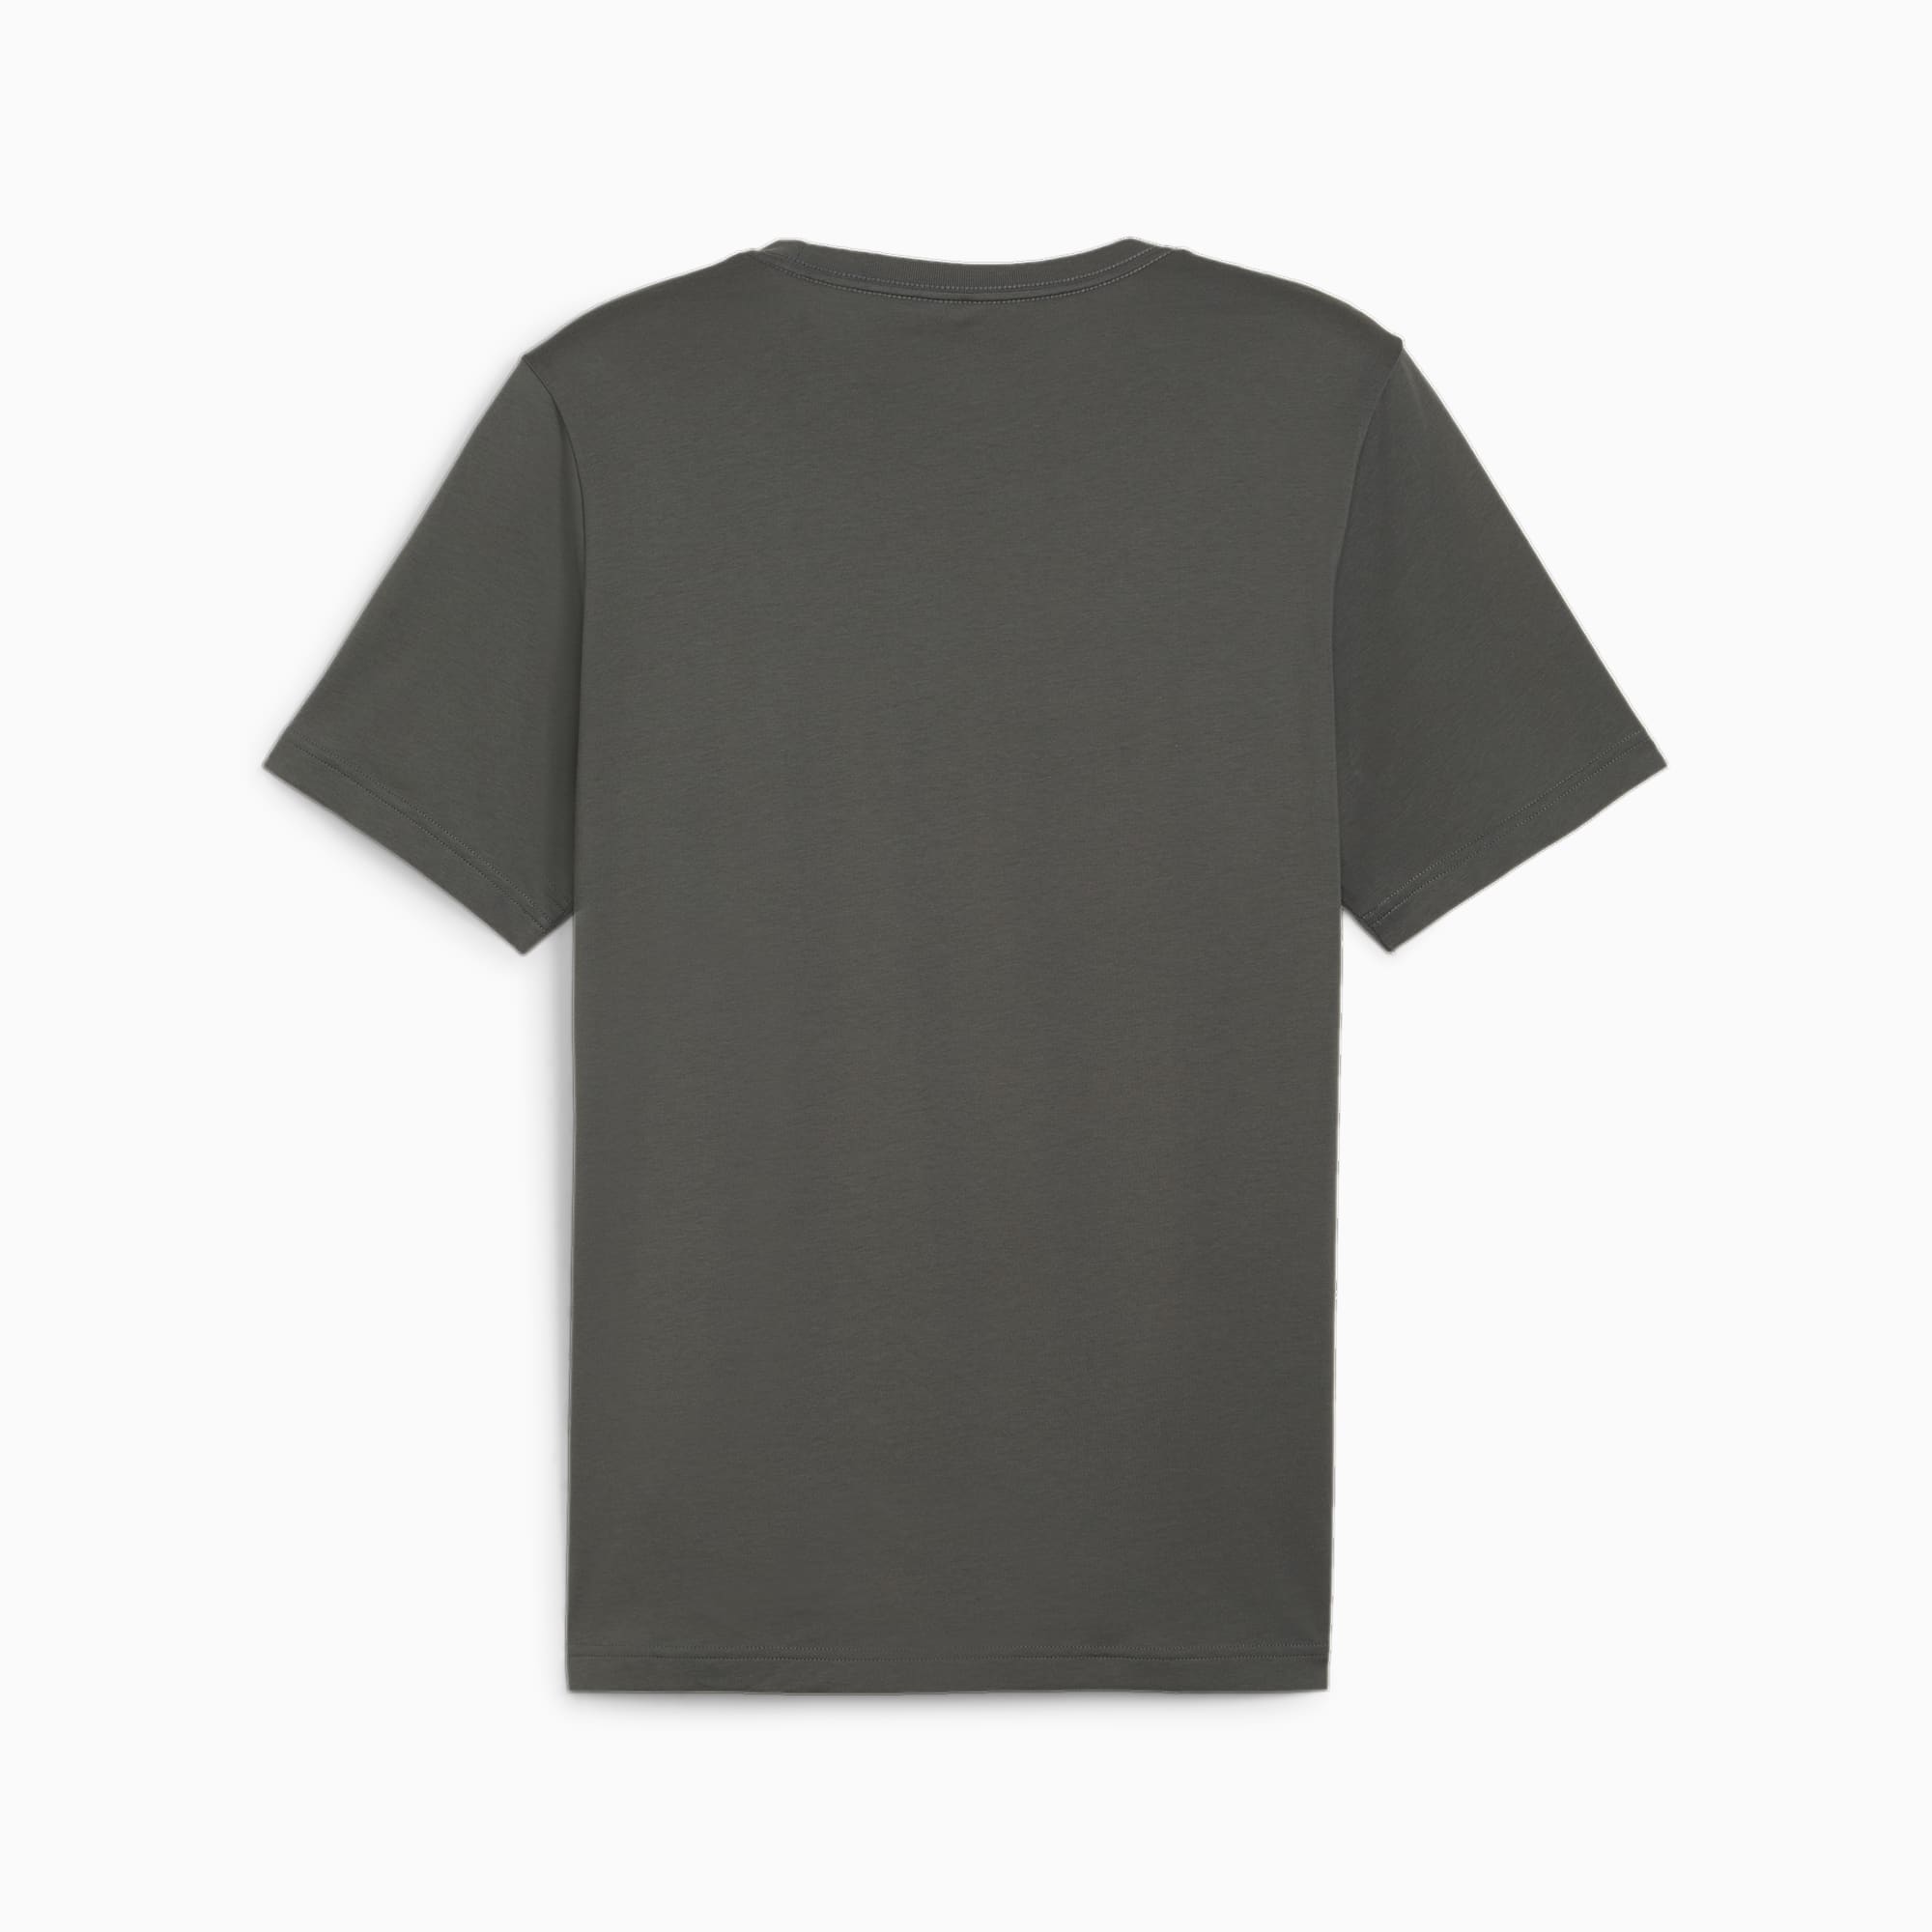 PUMA T-Shirt à Logo Essentials Homme, Gris